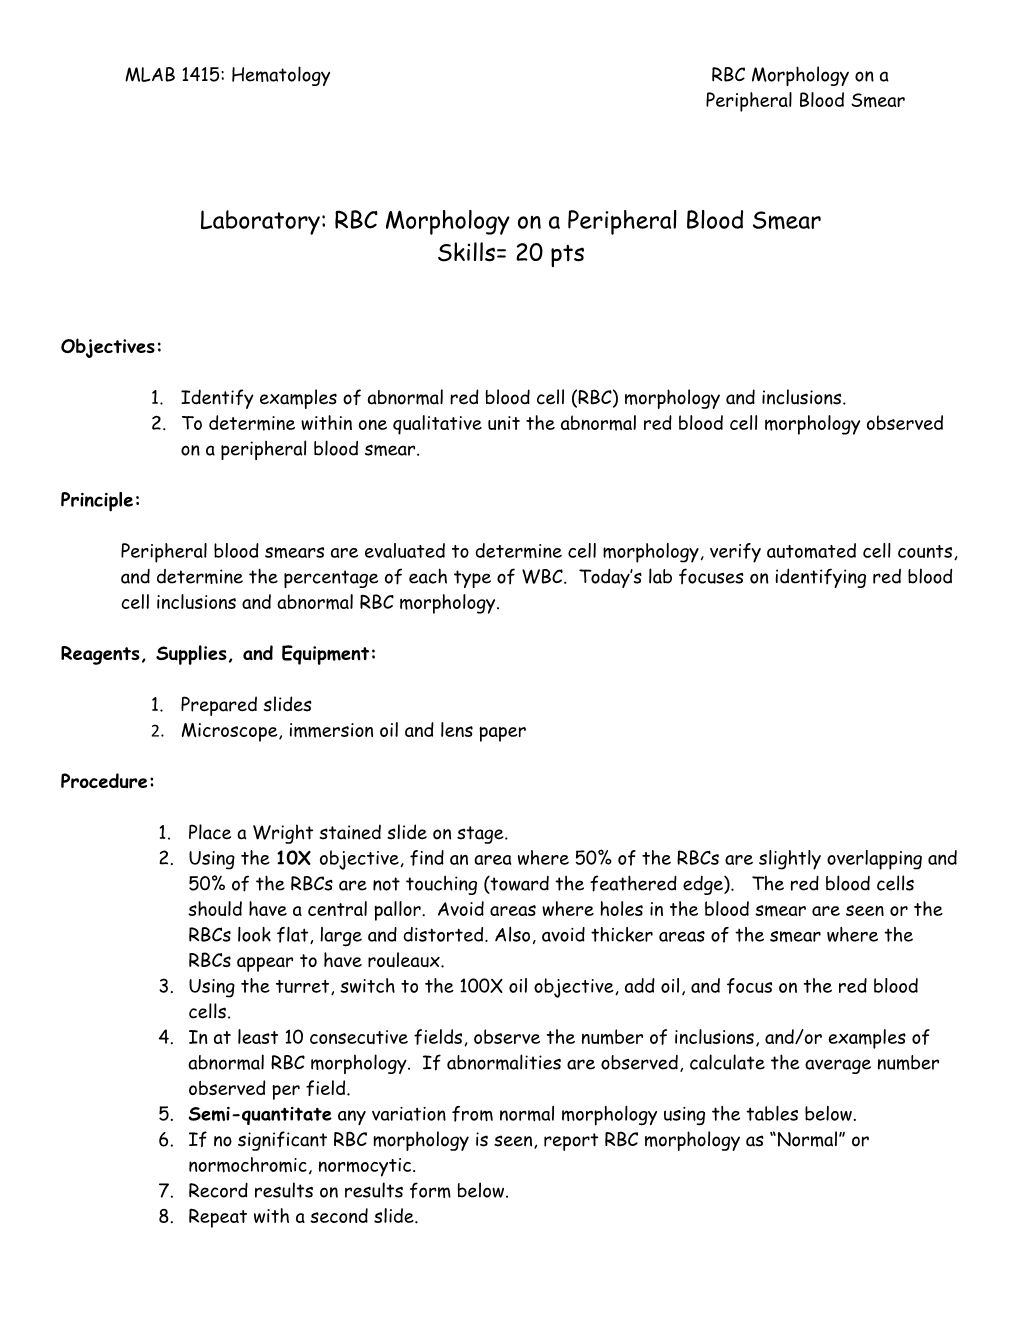 MLAB 1415: Hematology RBC Morphology on a Peripheral Blood Smear